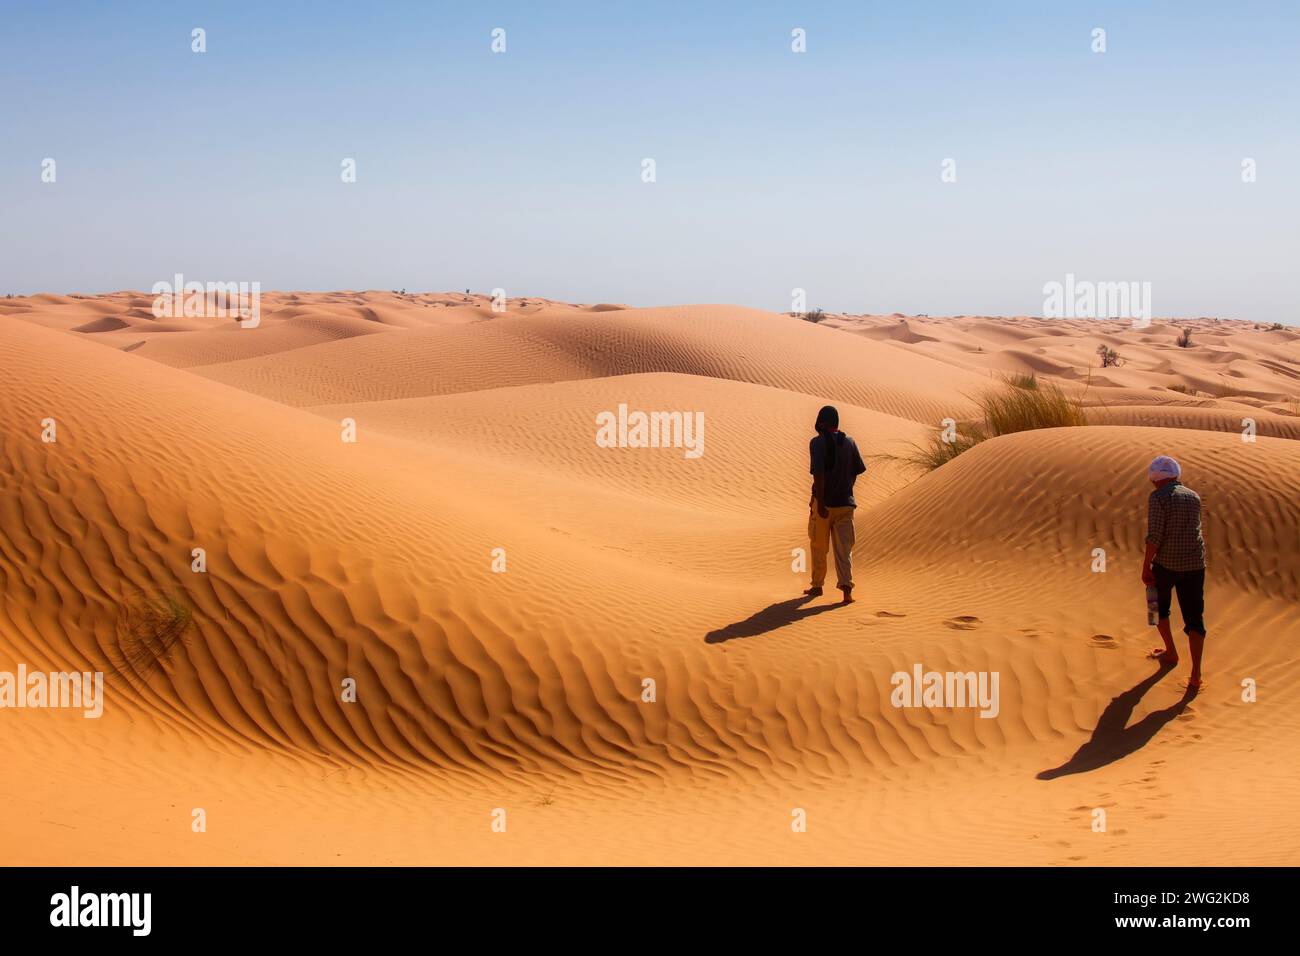 hiking man between dunes in the desert at bright sunlight Stock Photo